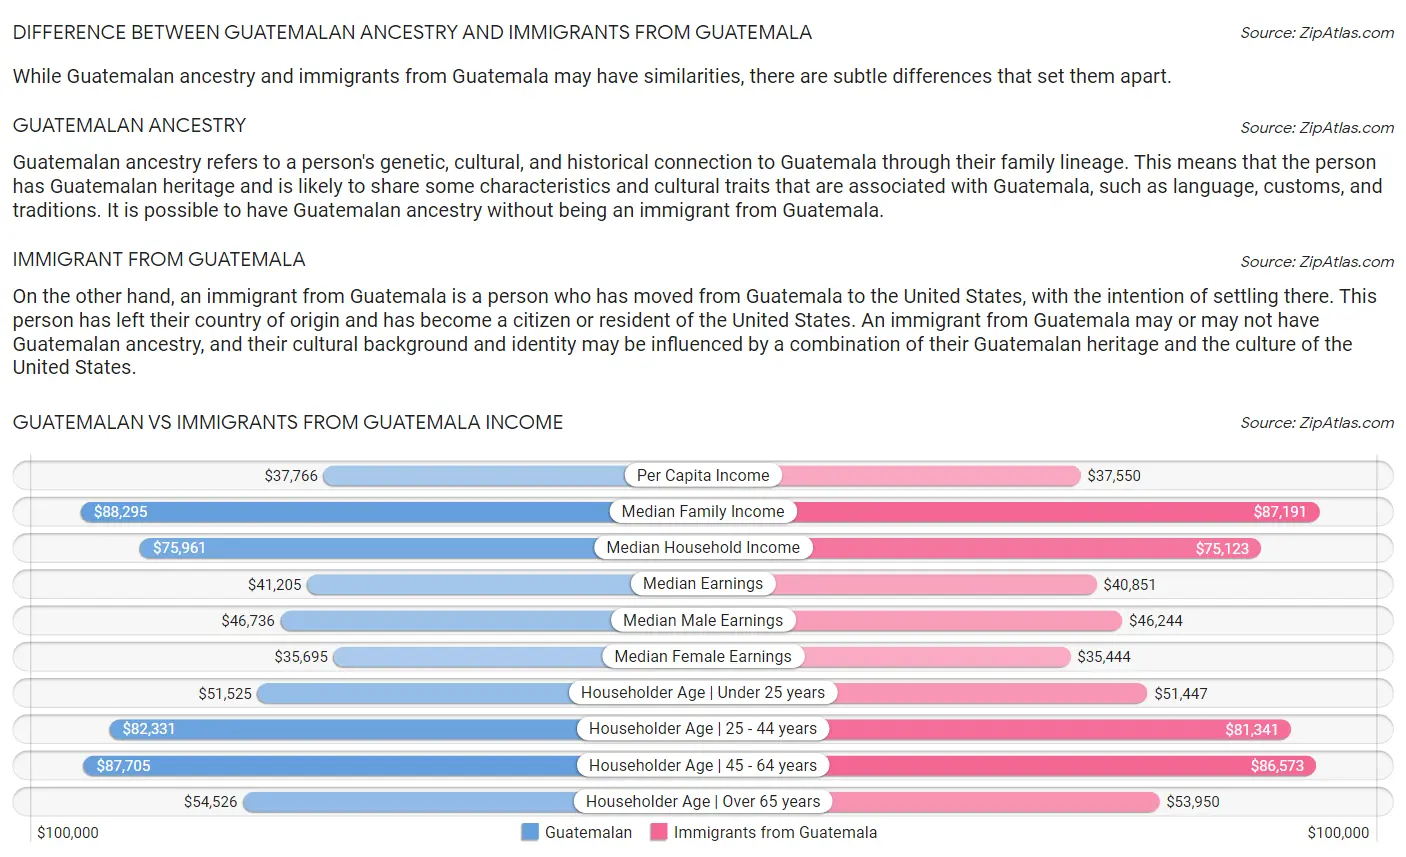 Guatemalan vs Immigrants from Guatemala Income